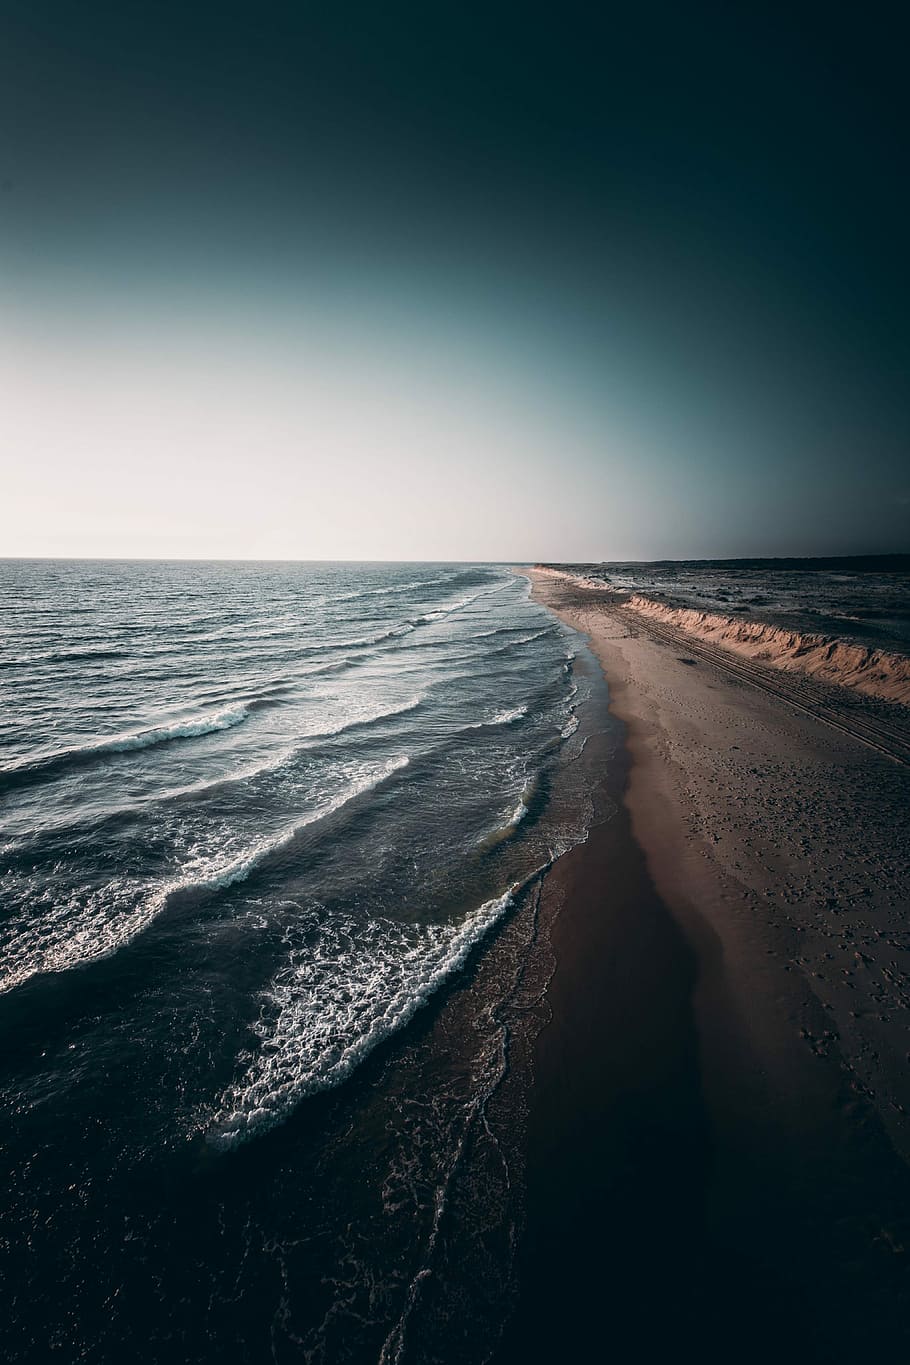 calm waves crashing on shore, landscape photo of shore, ocean